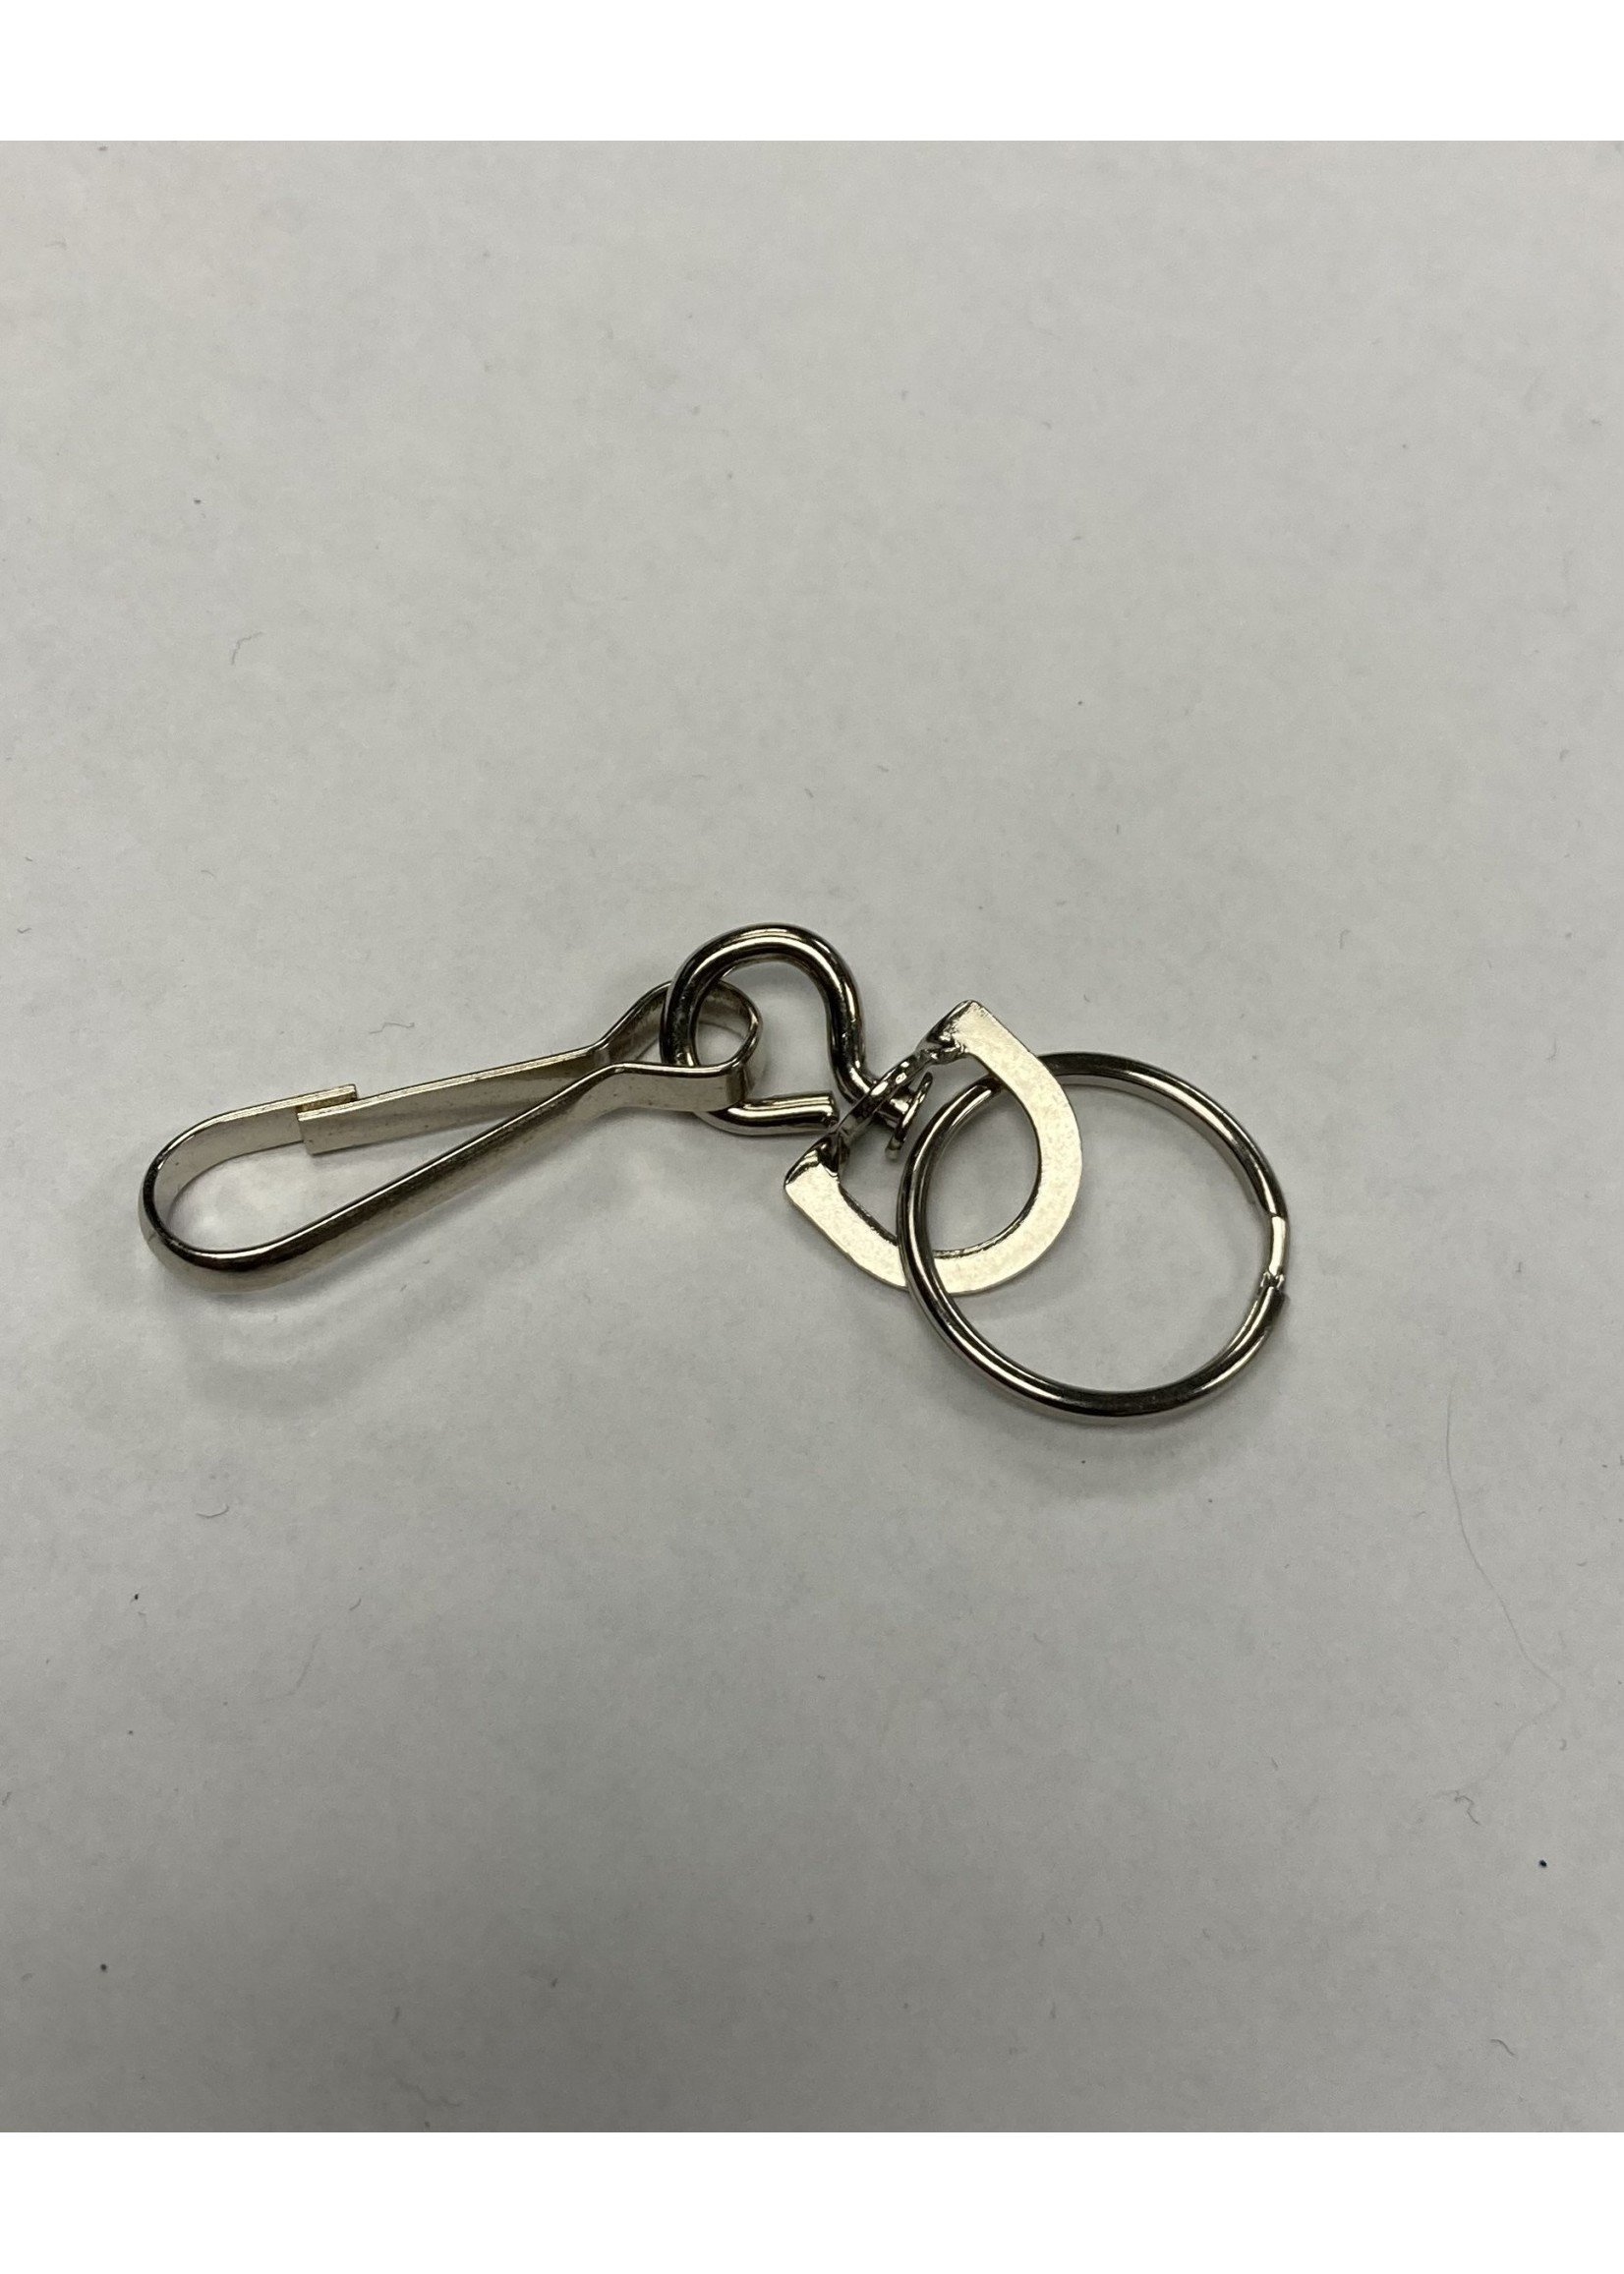 Key Ring clip lanyard accessory - Saint Paul's Place